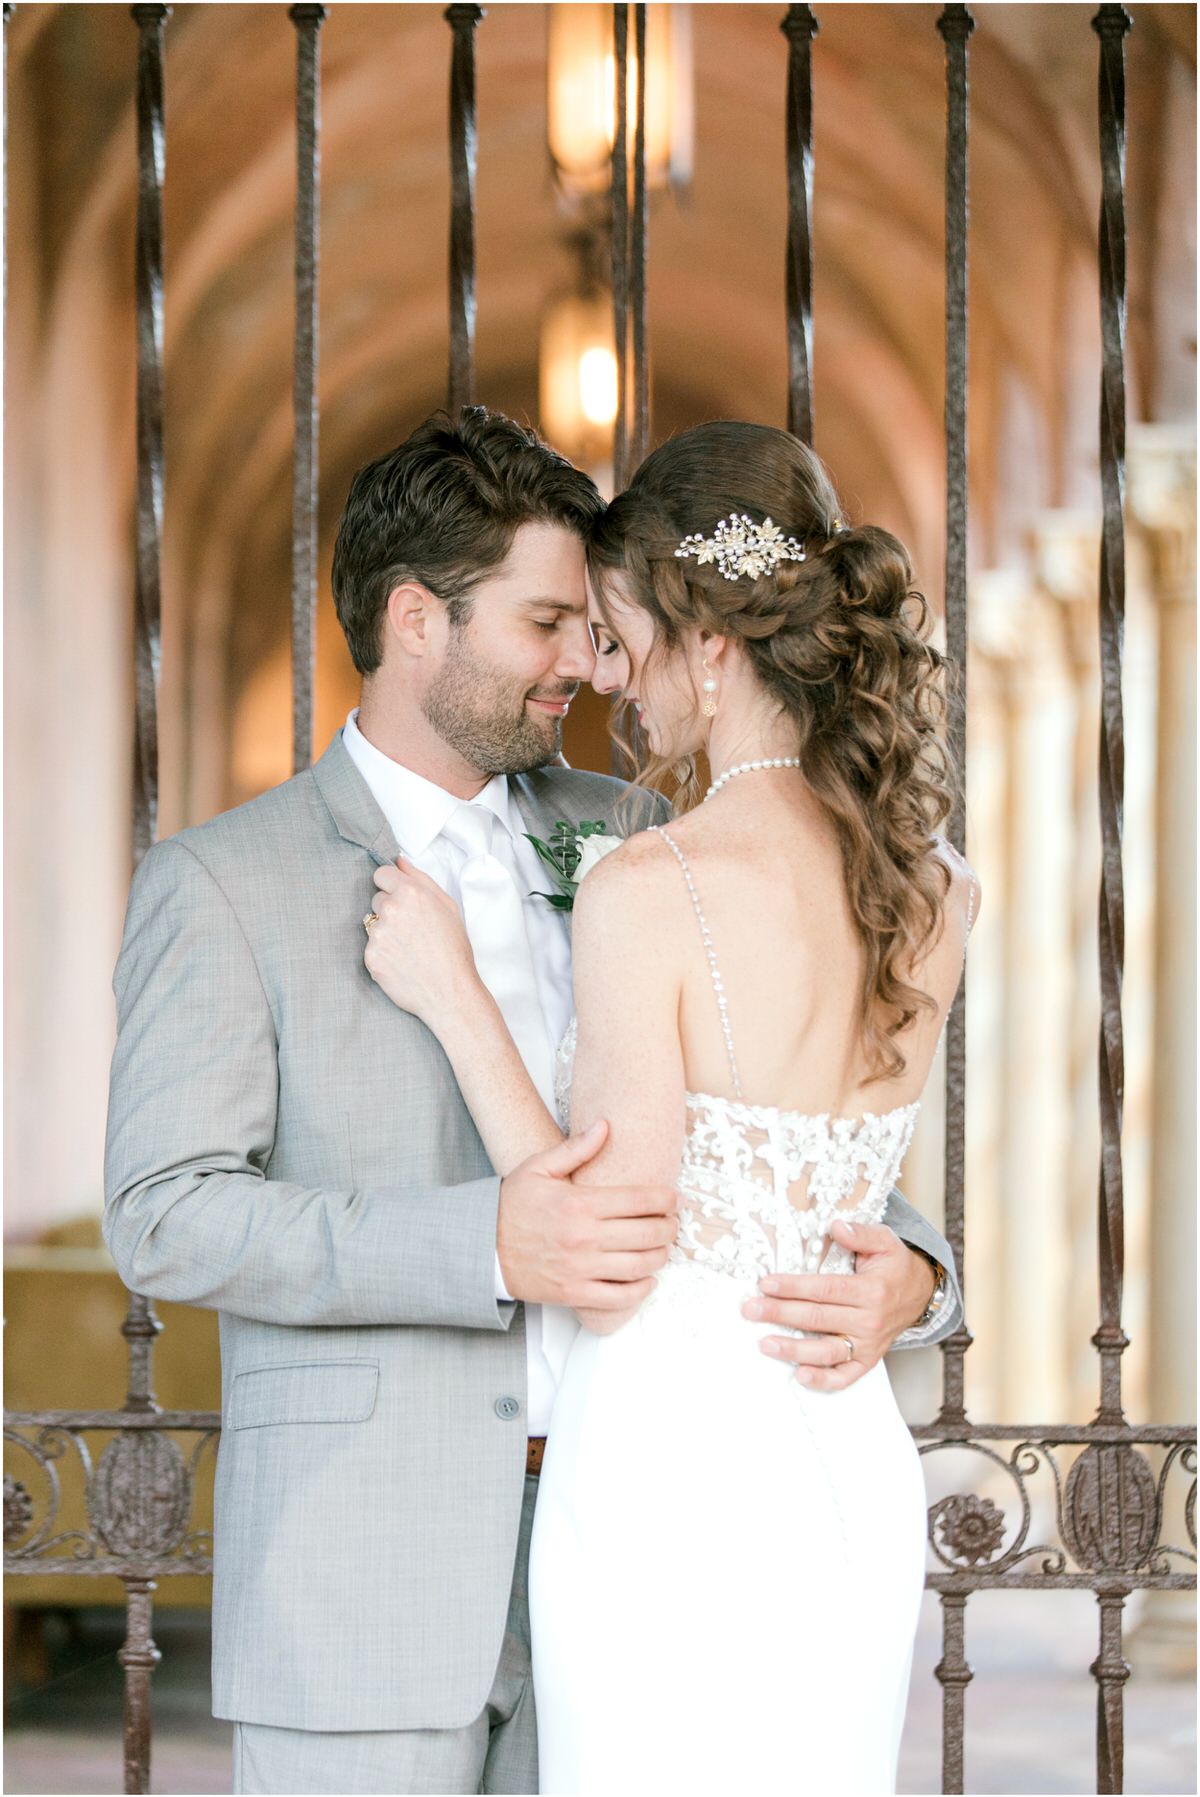 Elegantly intimate howey mansion wedding couple in front of iron gates